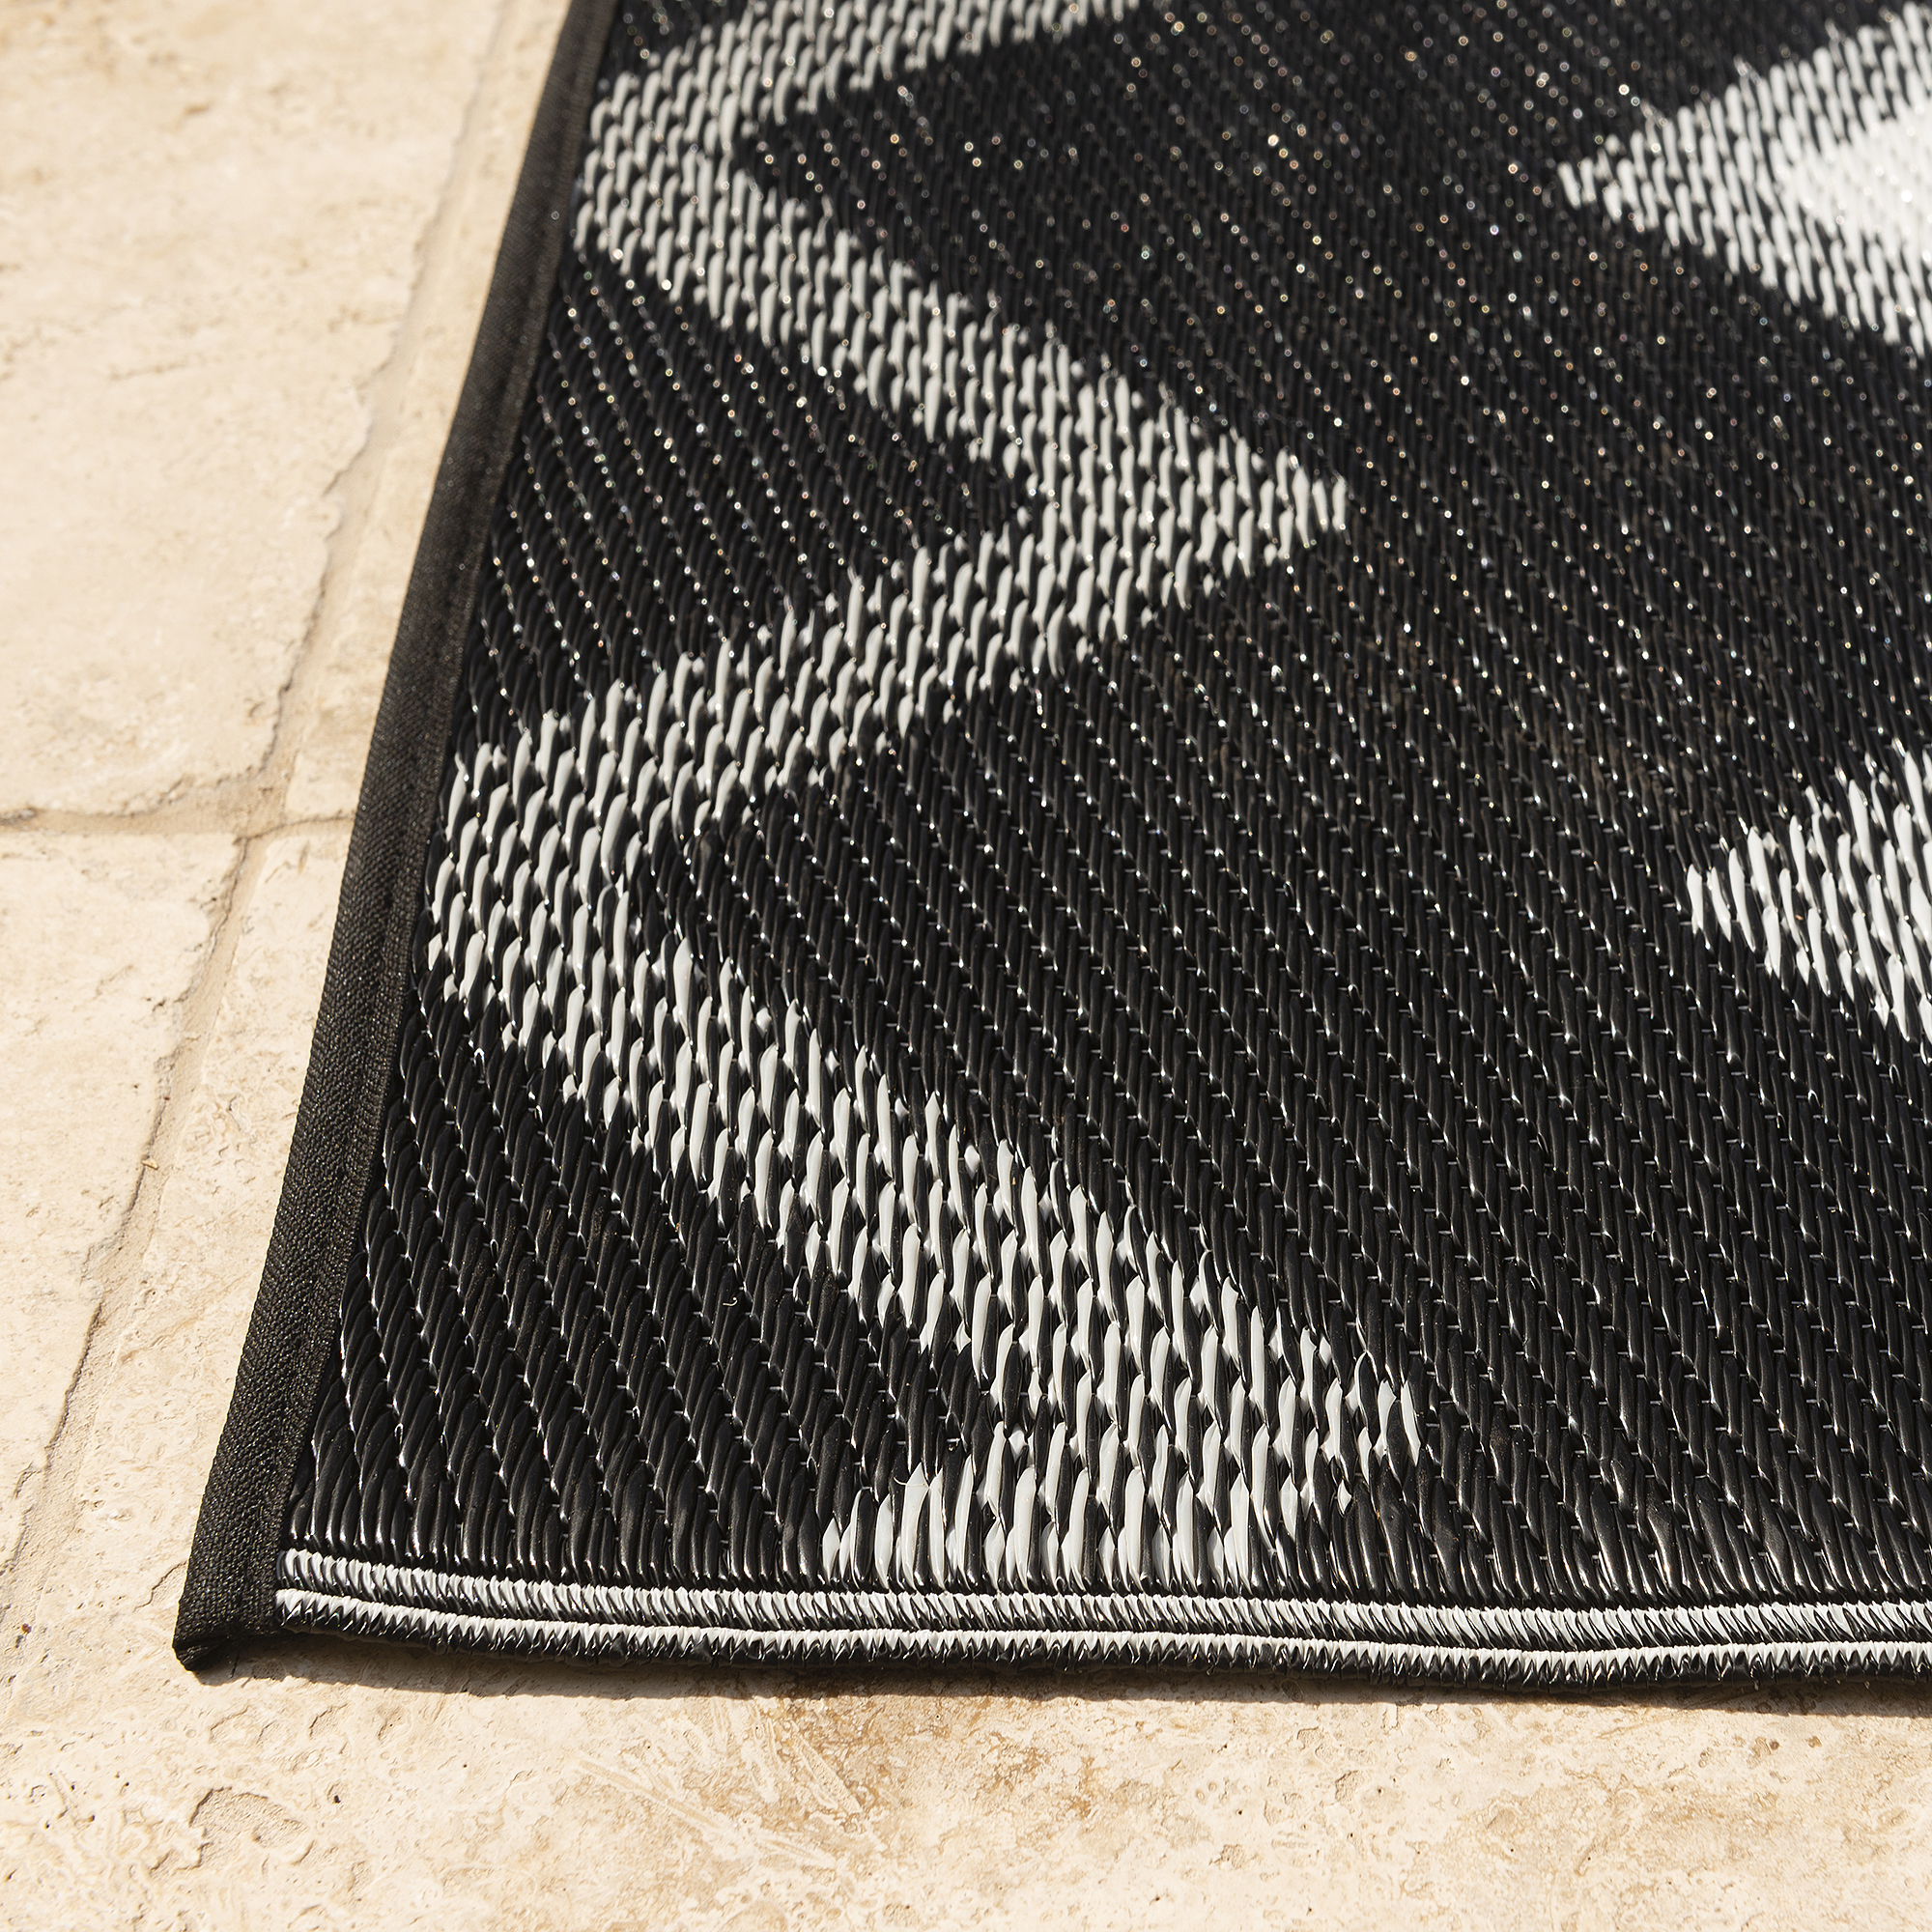 150x220cm Black/White Outdoor Alfresco Polypropylene Washable UV-resistant Rug - OUT150W